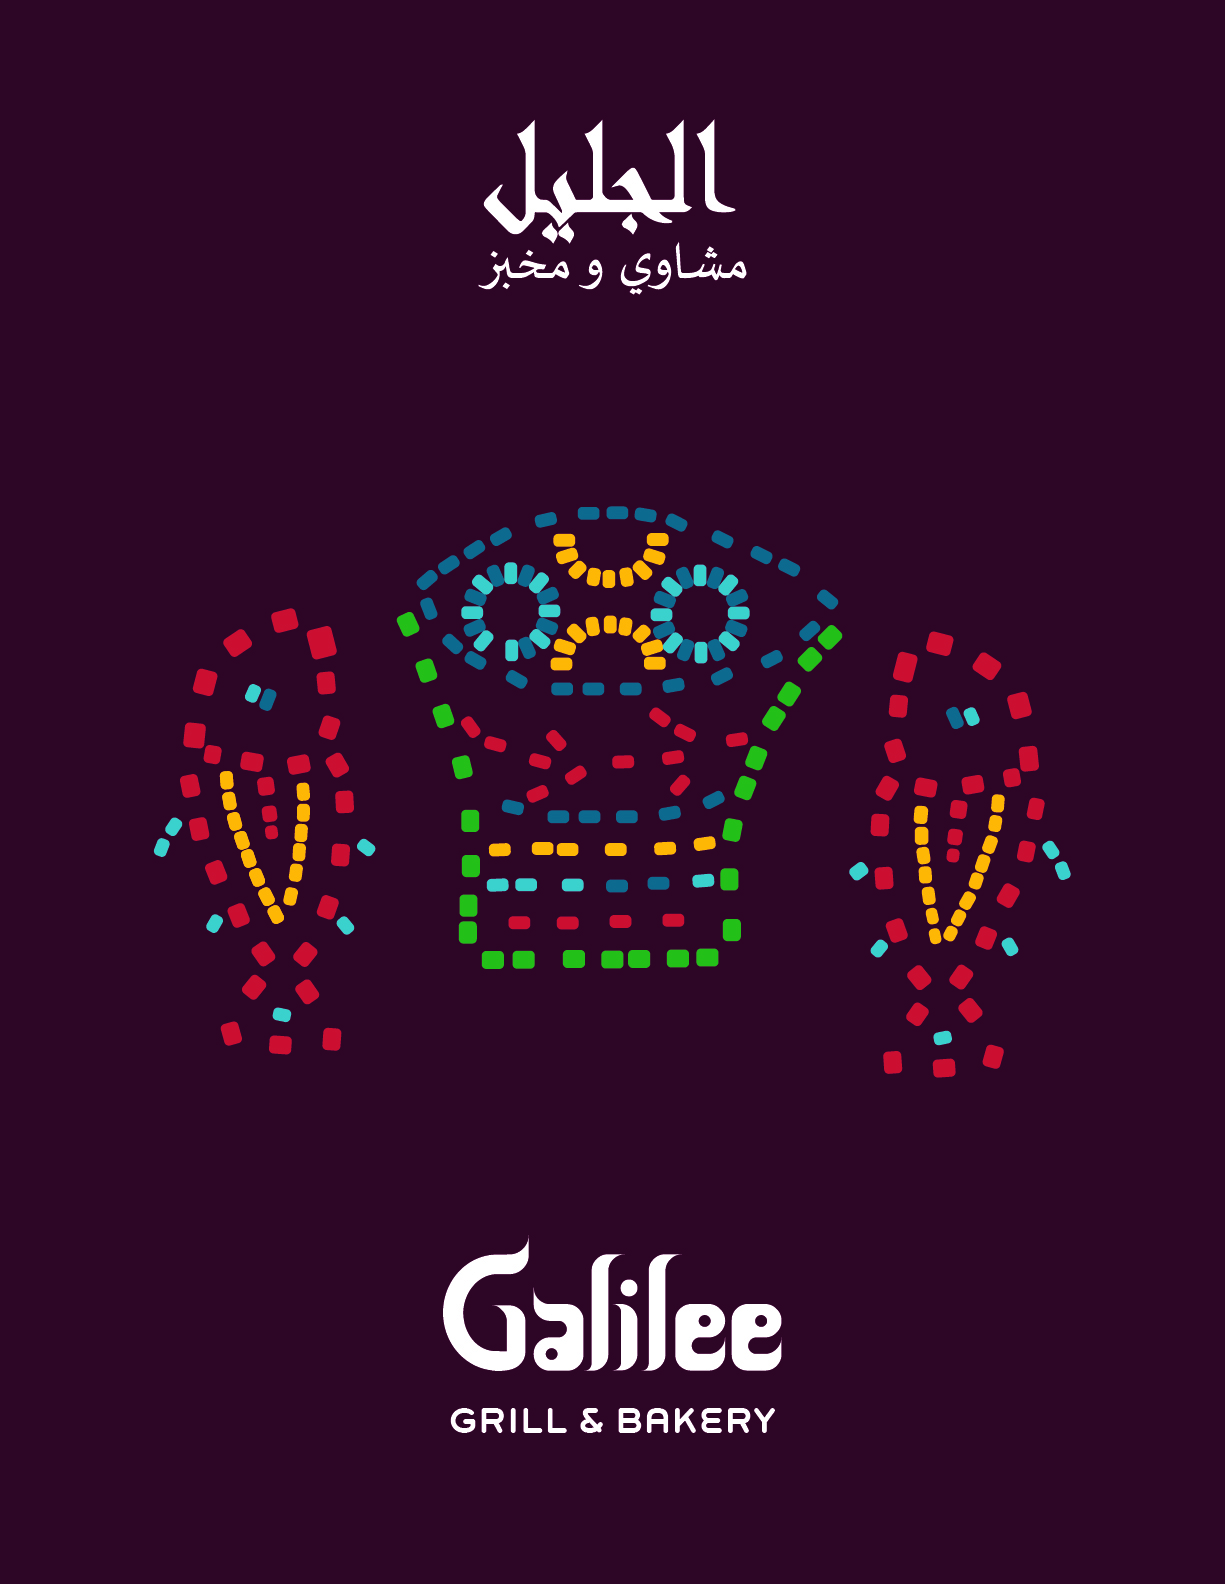 Galilee Grill